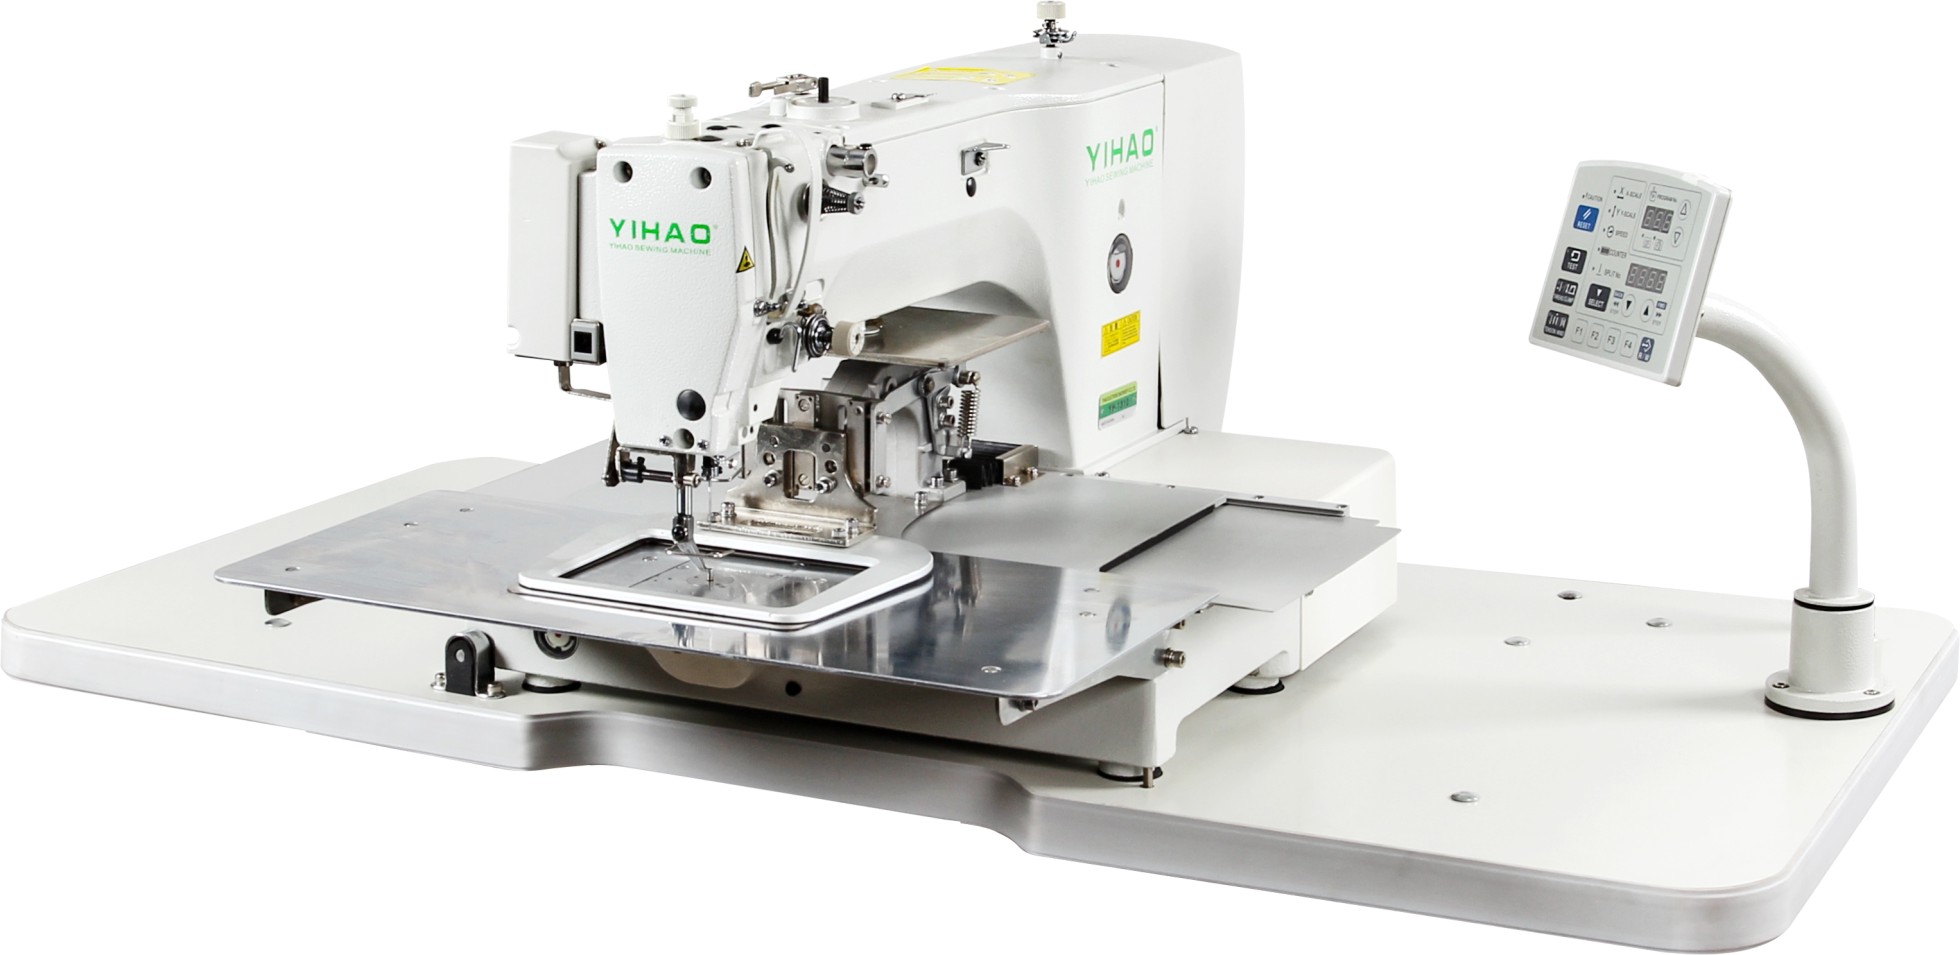 Yh-311 direct drive computer pattern sewing machine